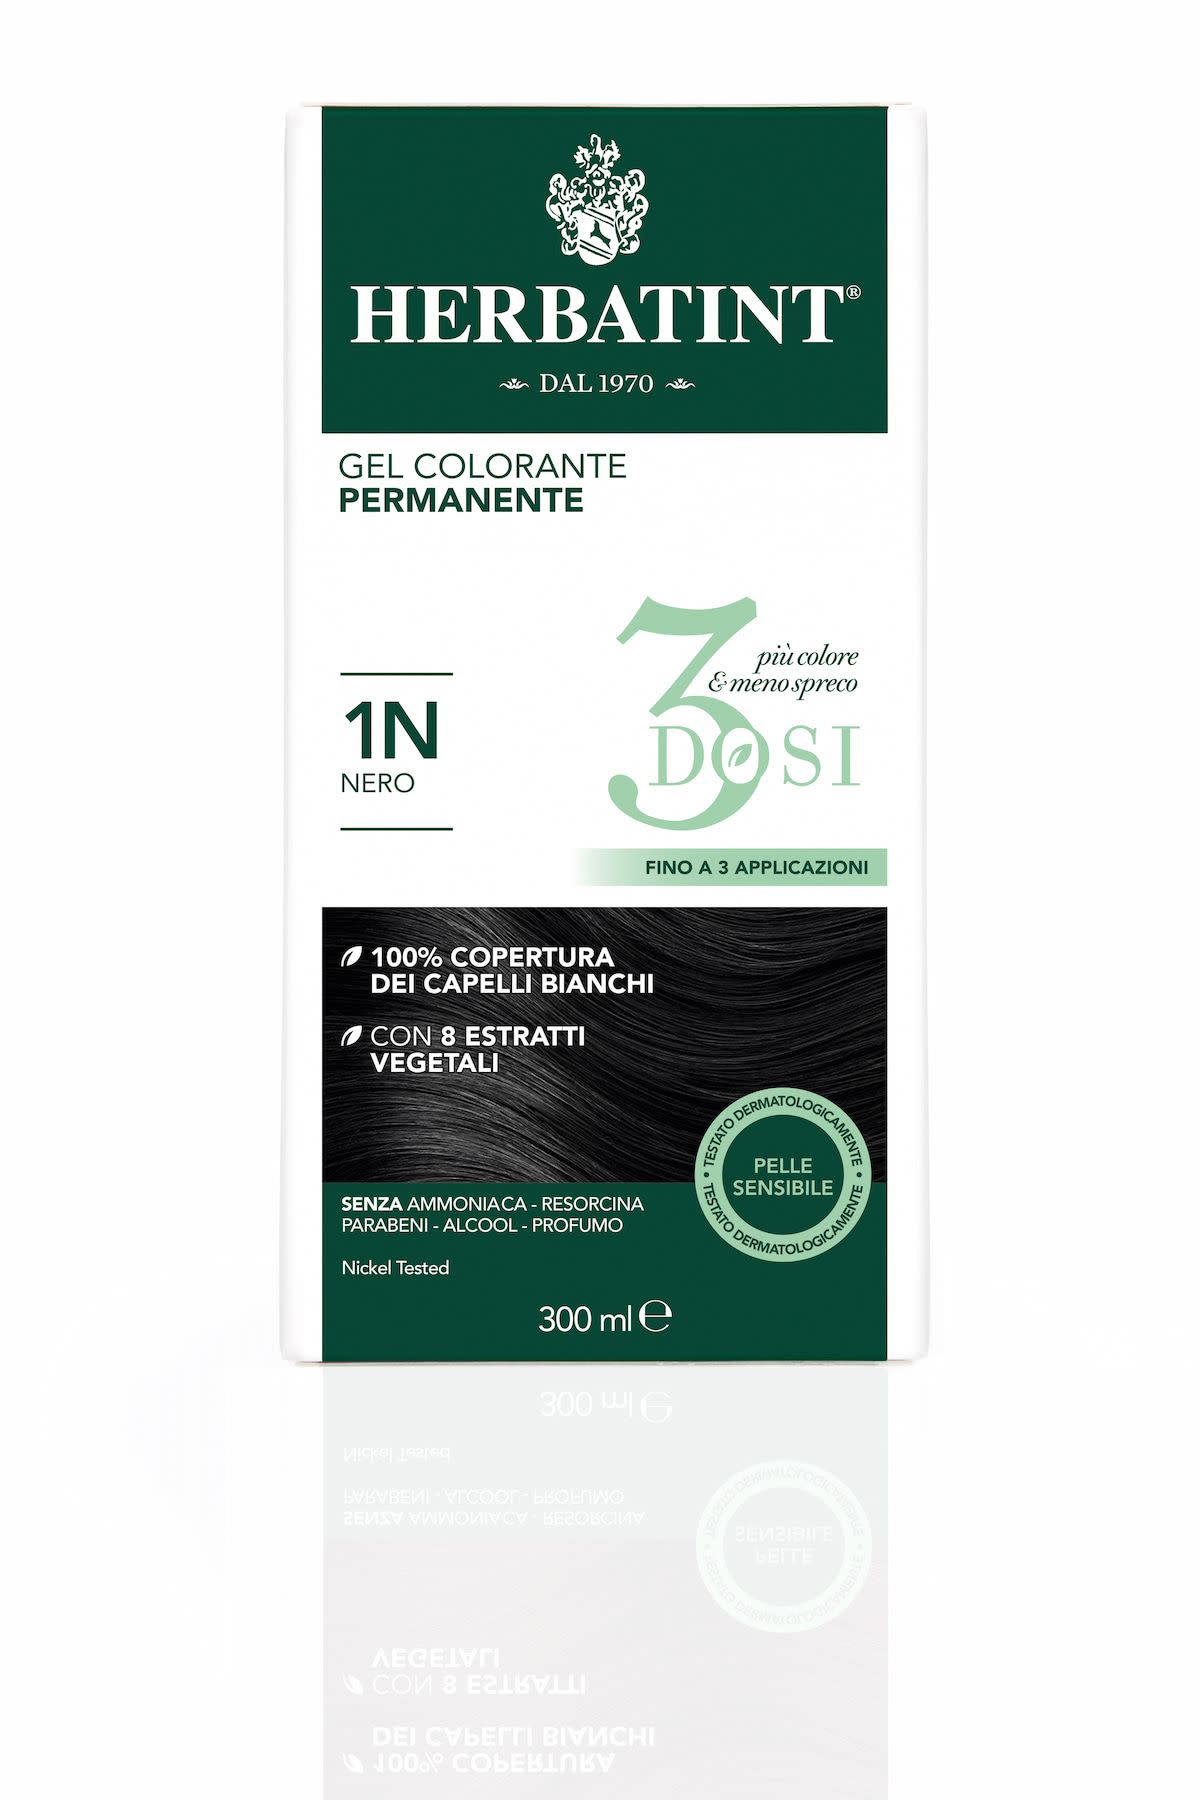 975906658 - Herbatint Gel colorante permanente 3 dosi 1N nero 300ml - 4732906_3.jpg